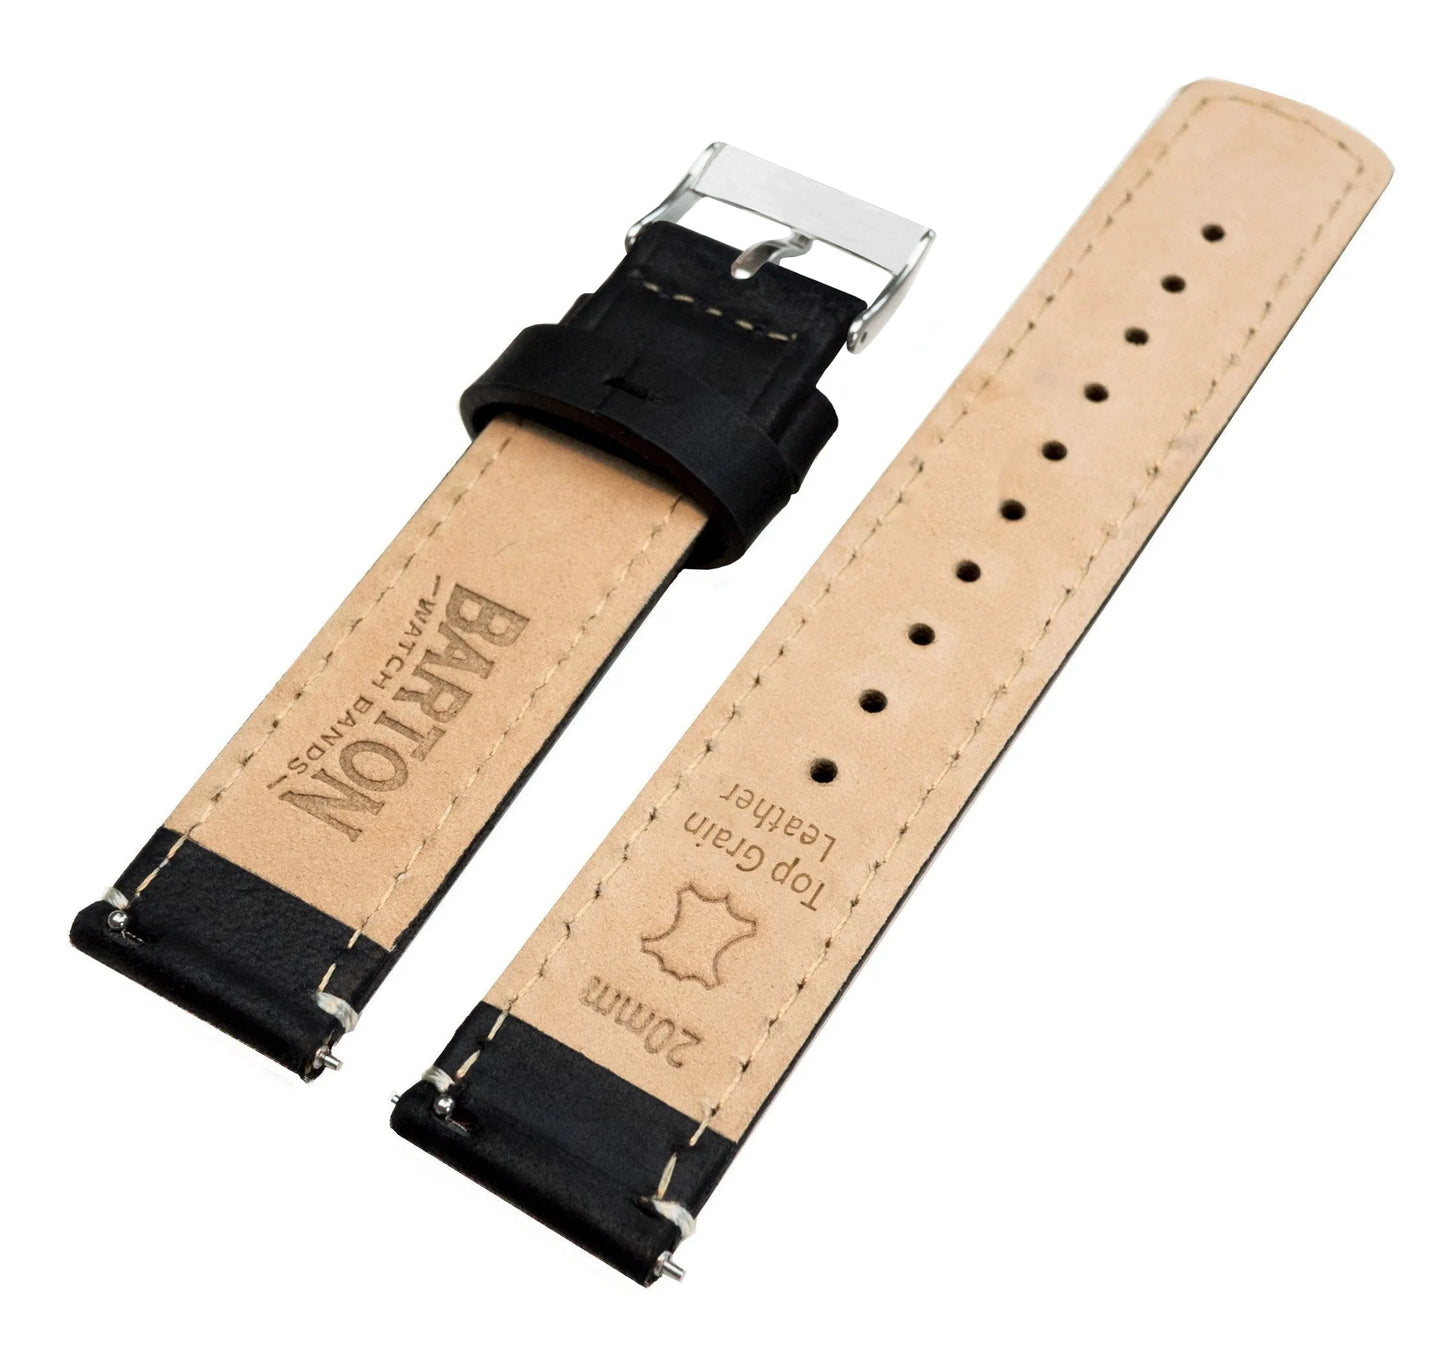 Samsung Galaxy Watch3 | Black Leather & Linen White Stitching - Barton Watch Bands